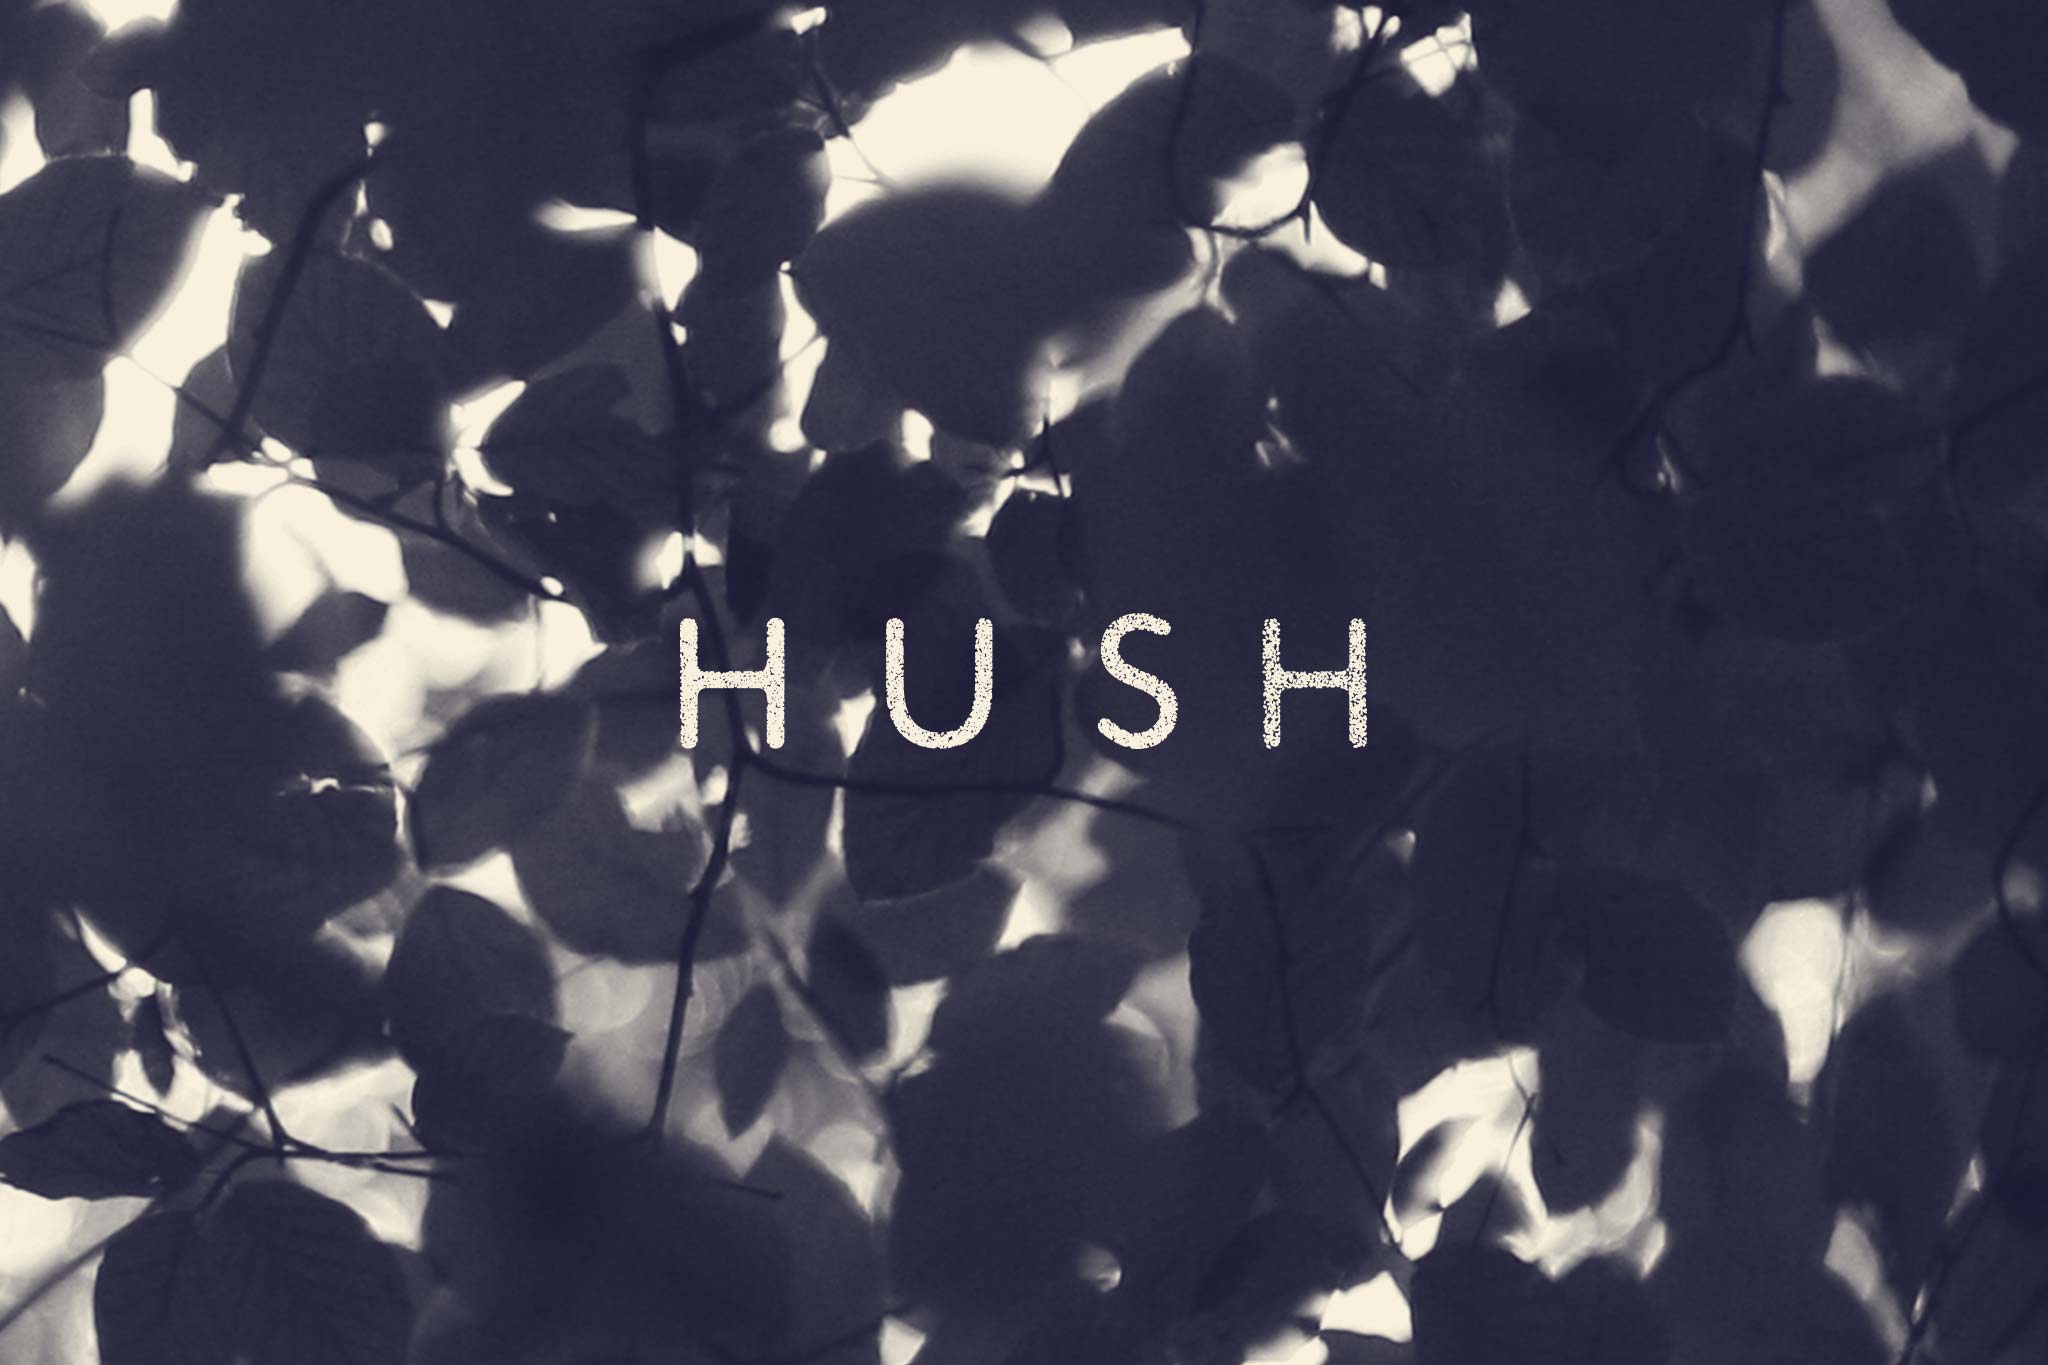 “Hush